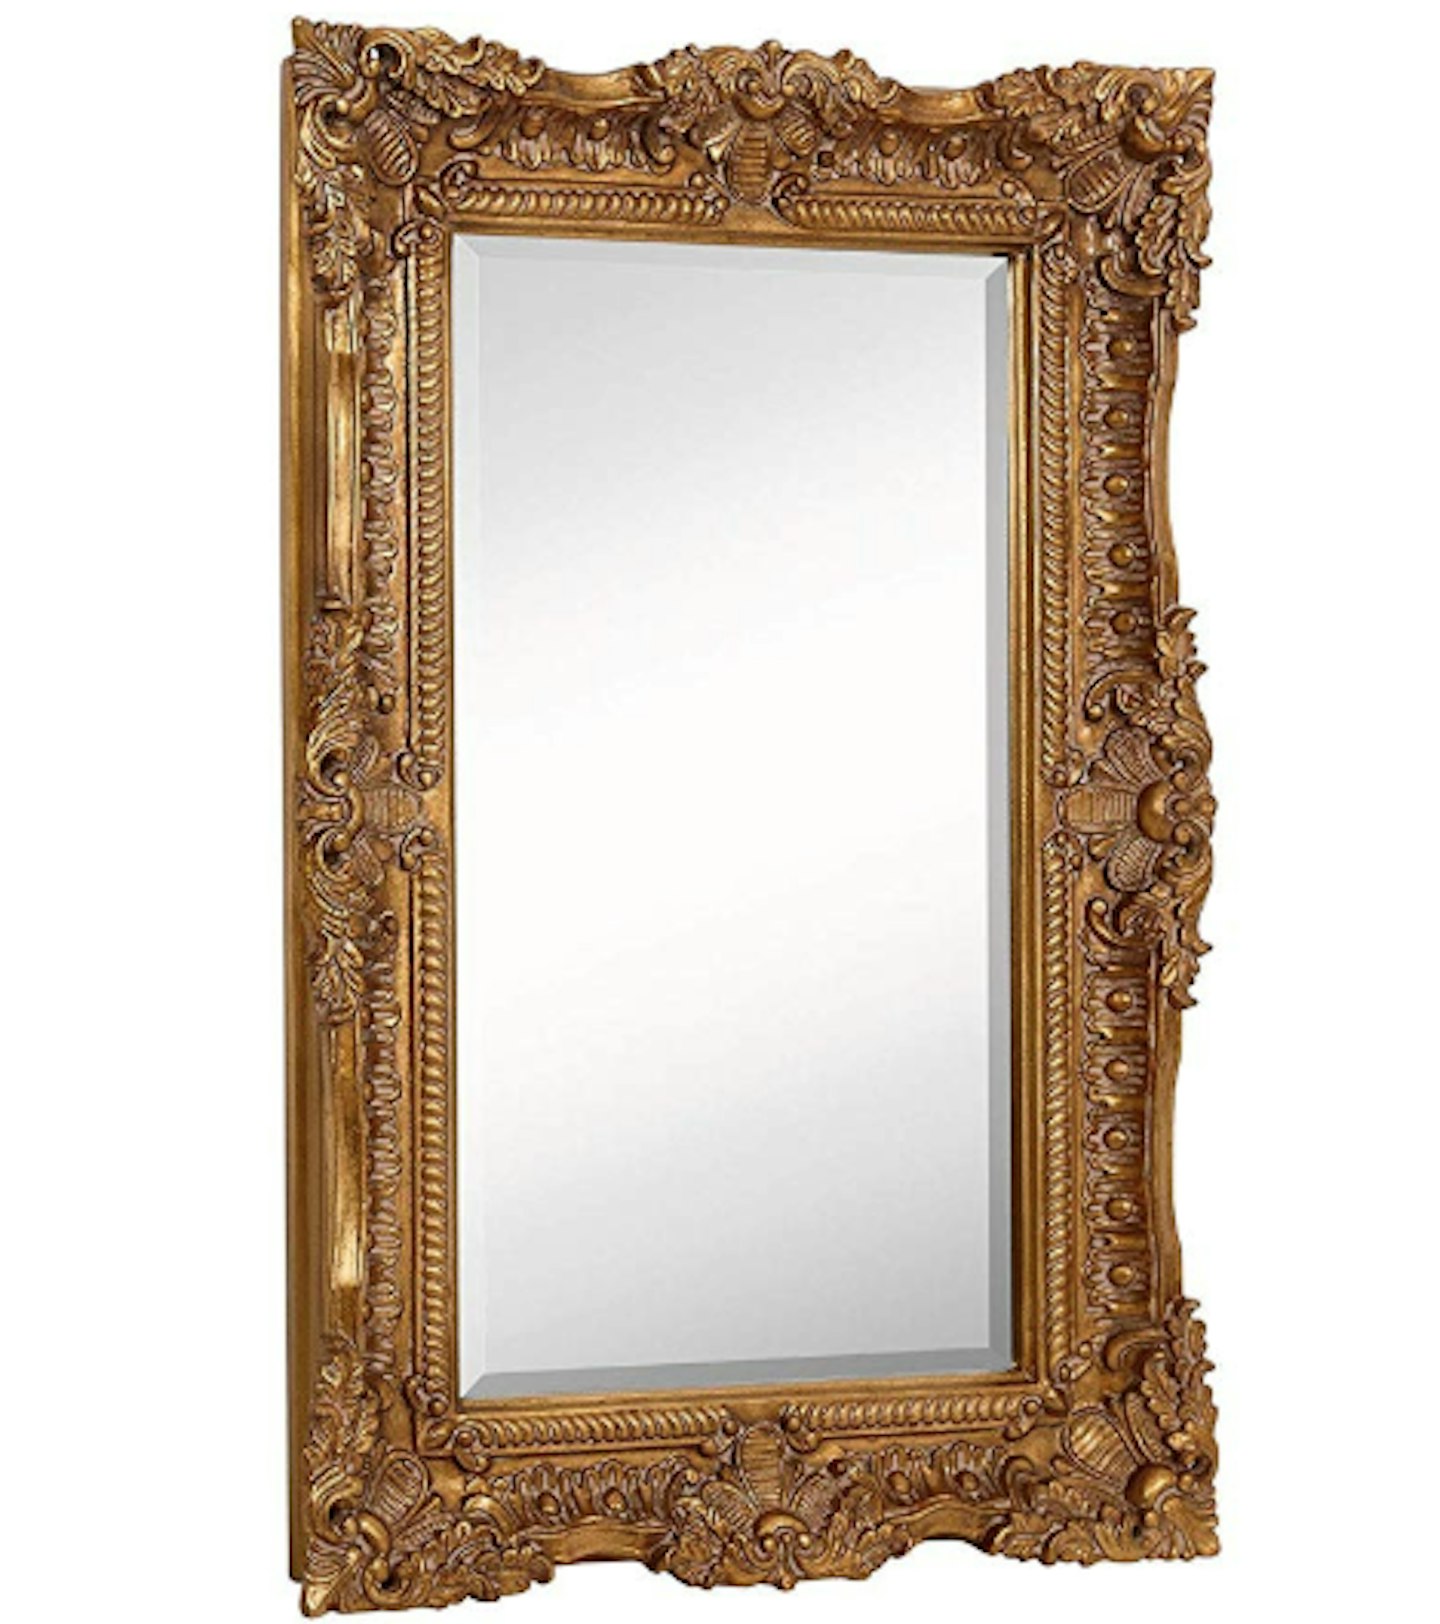 Hamilton Hills Large Ornate Baroque Frame Mirror, 136.99